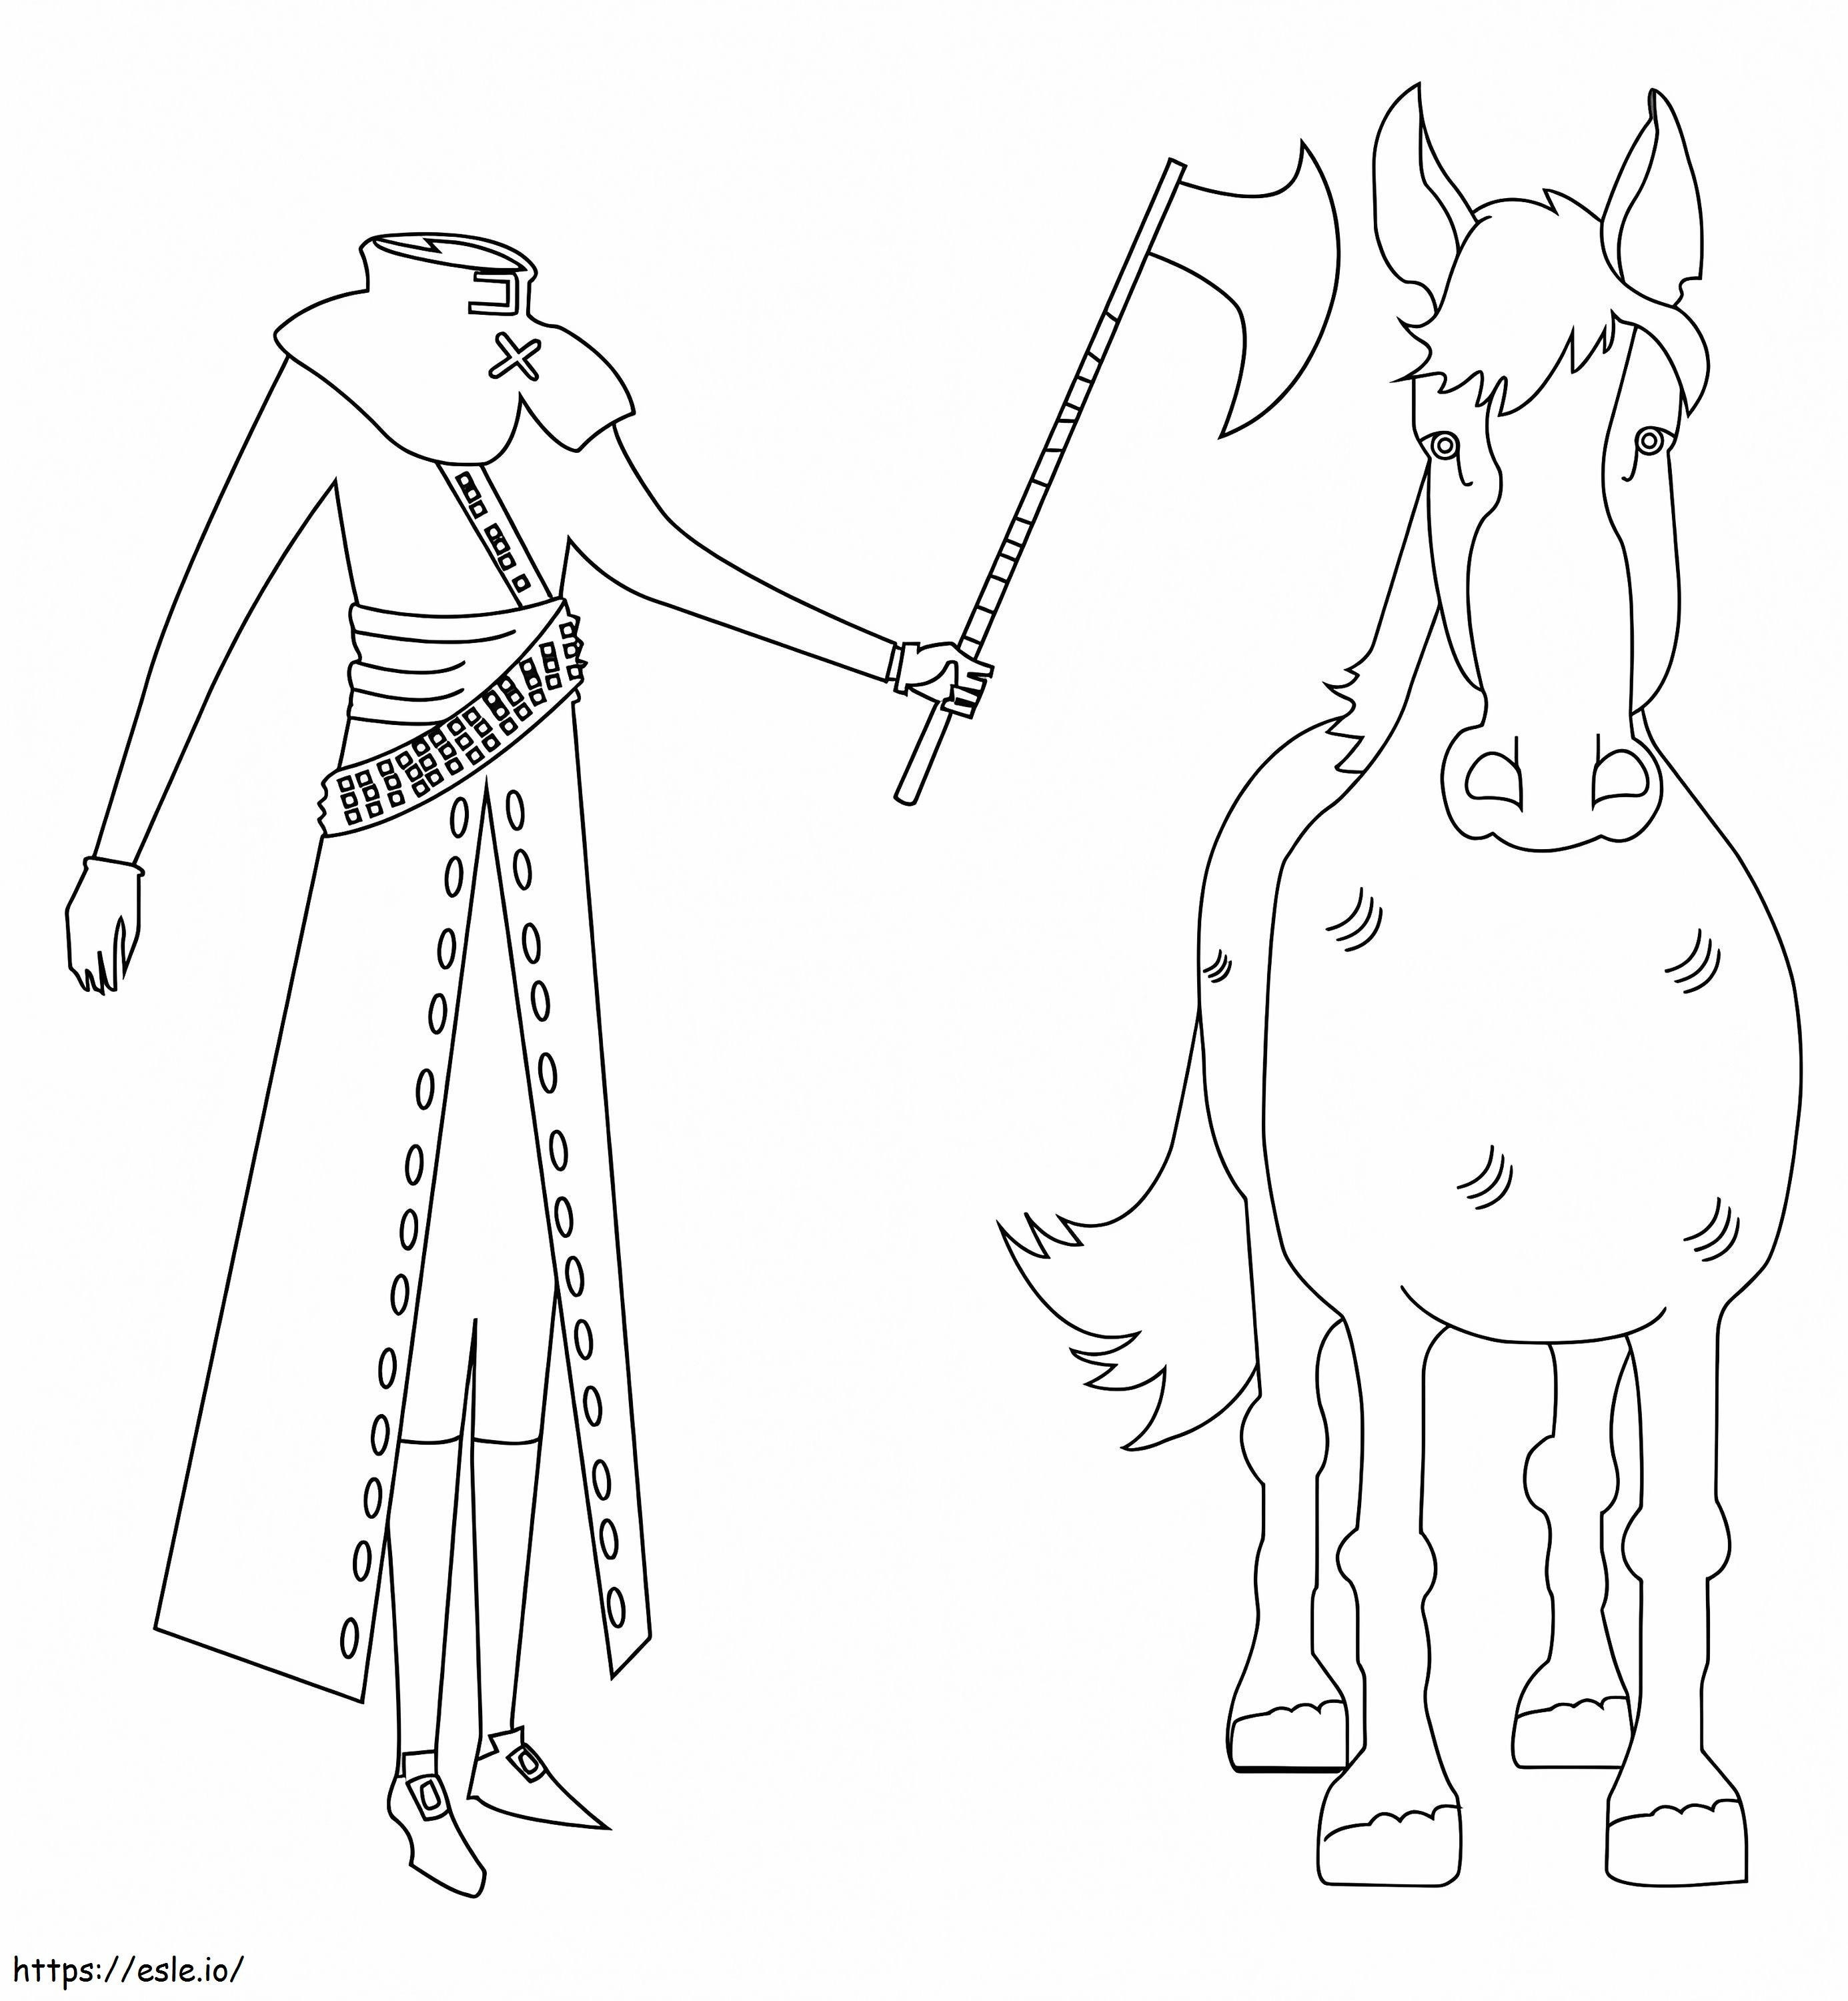 Headless Horseman 2 coloring page